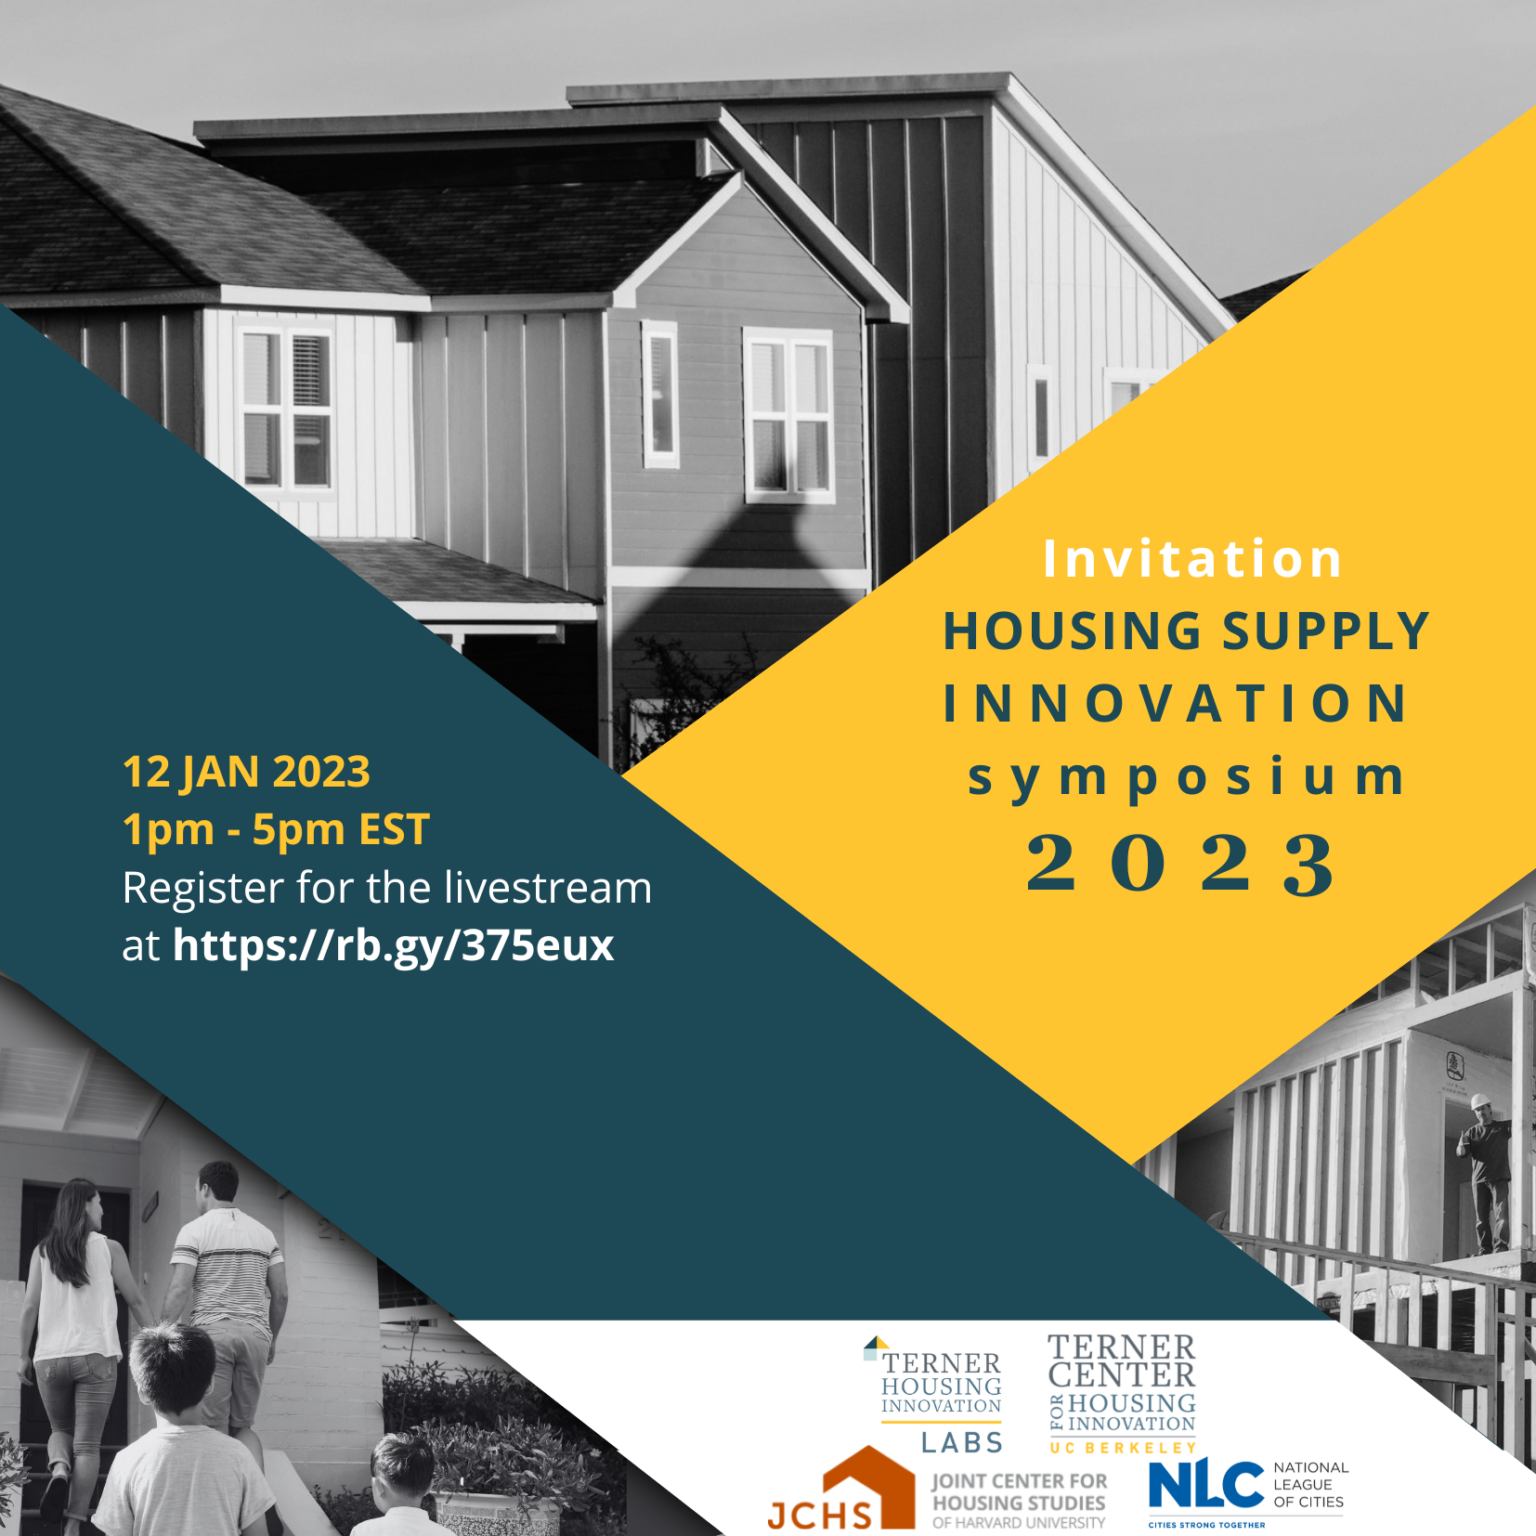 Past Event 2023 Housing Supply Innovation Symposium Terner Center